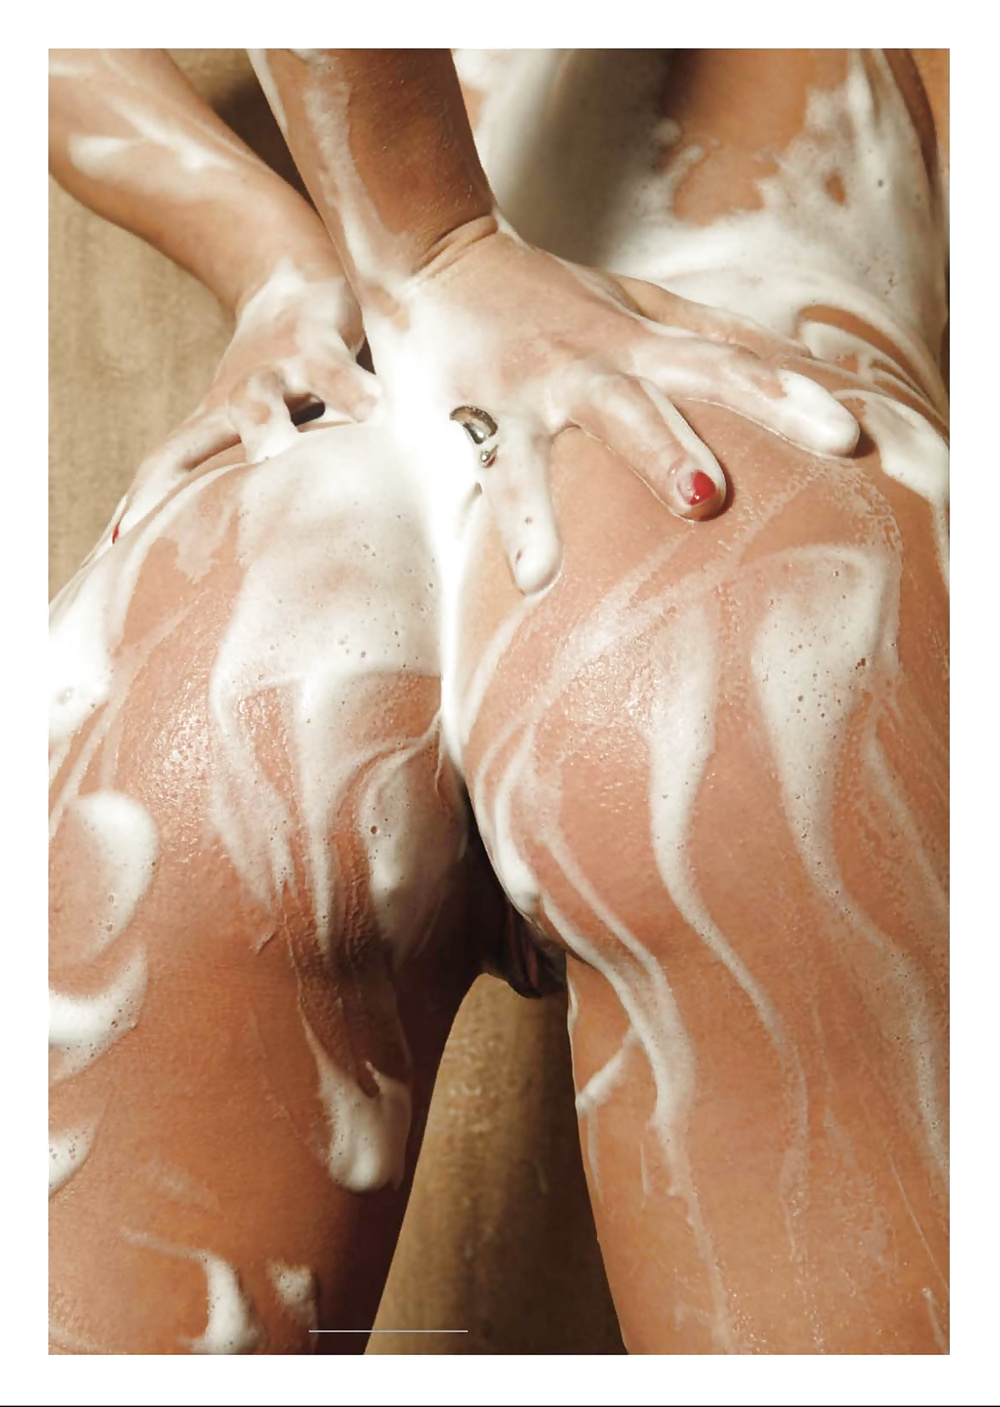 La miley cyrus argenta desnuda - argentinian cyrus naked
 #39662755